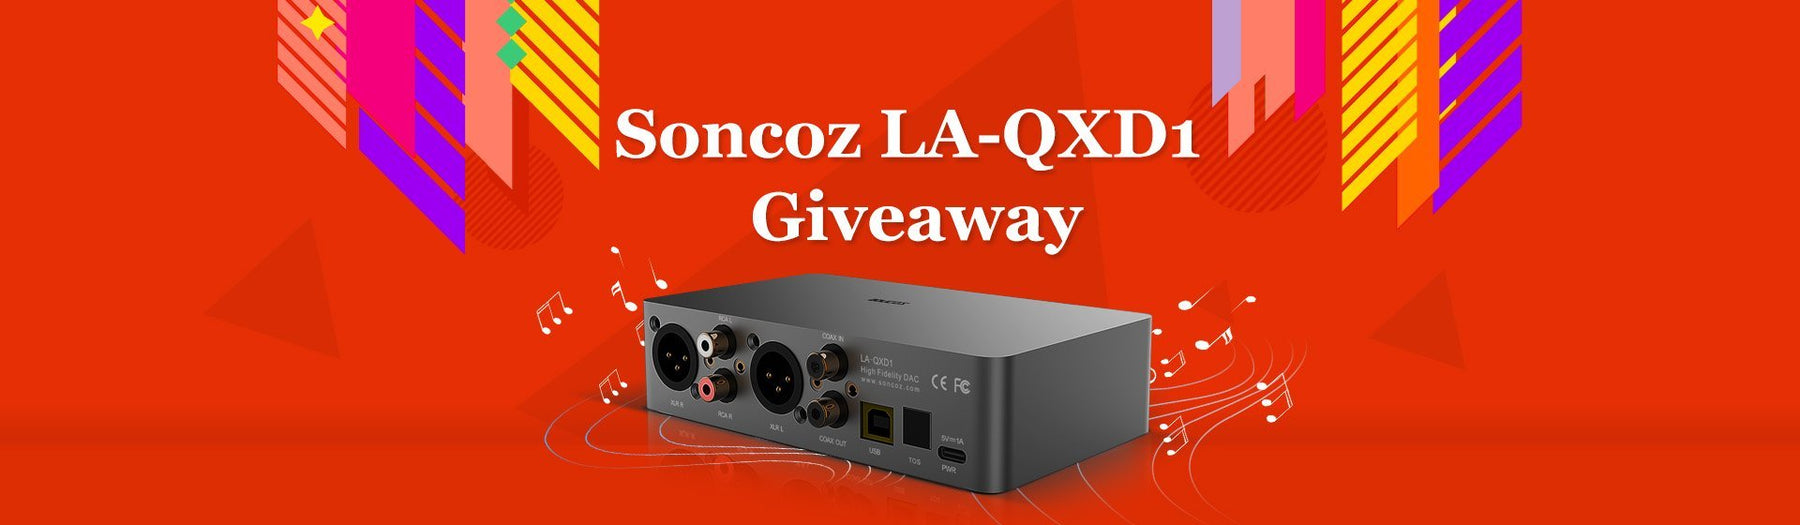 Soncoz LA-QXD1 giveaway